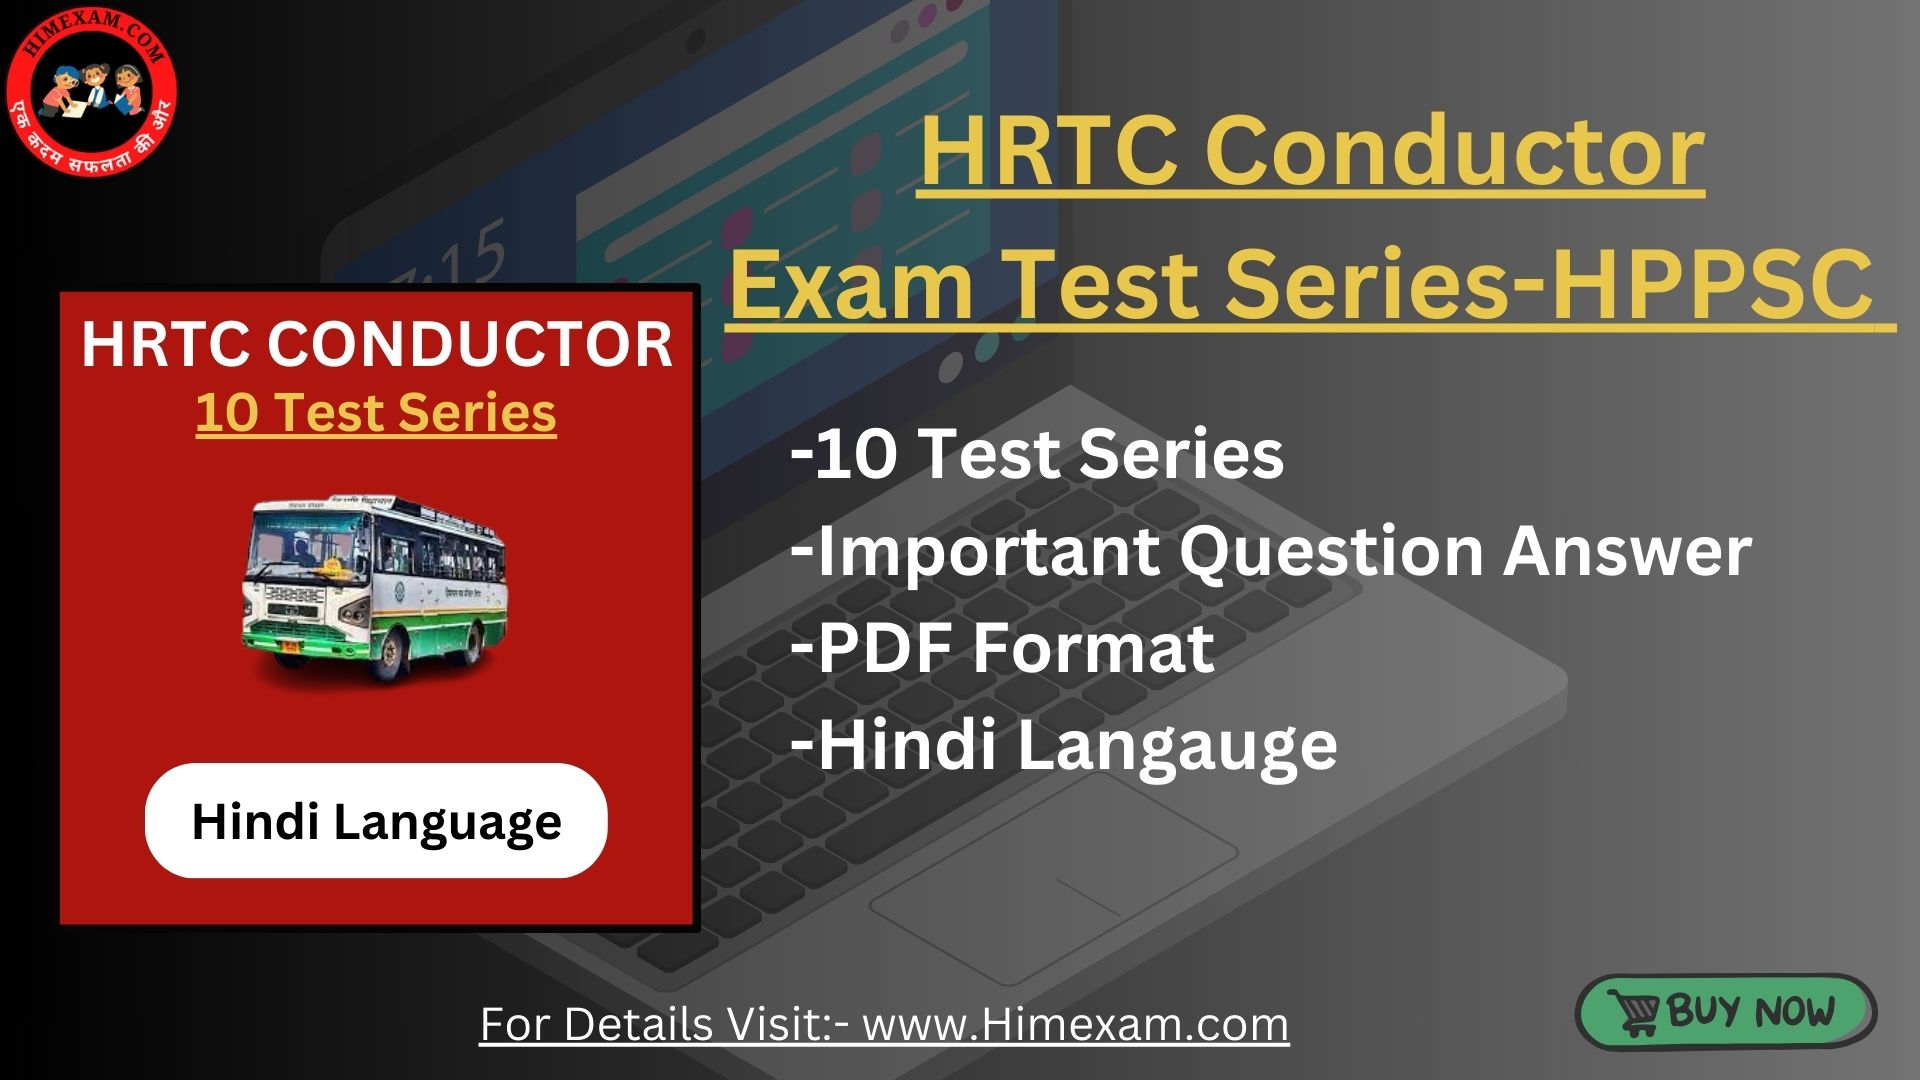 Hrtc Conductor Test series